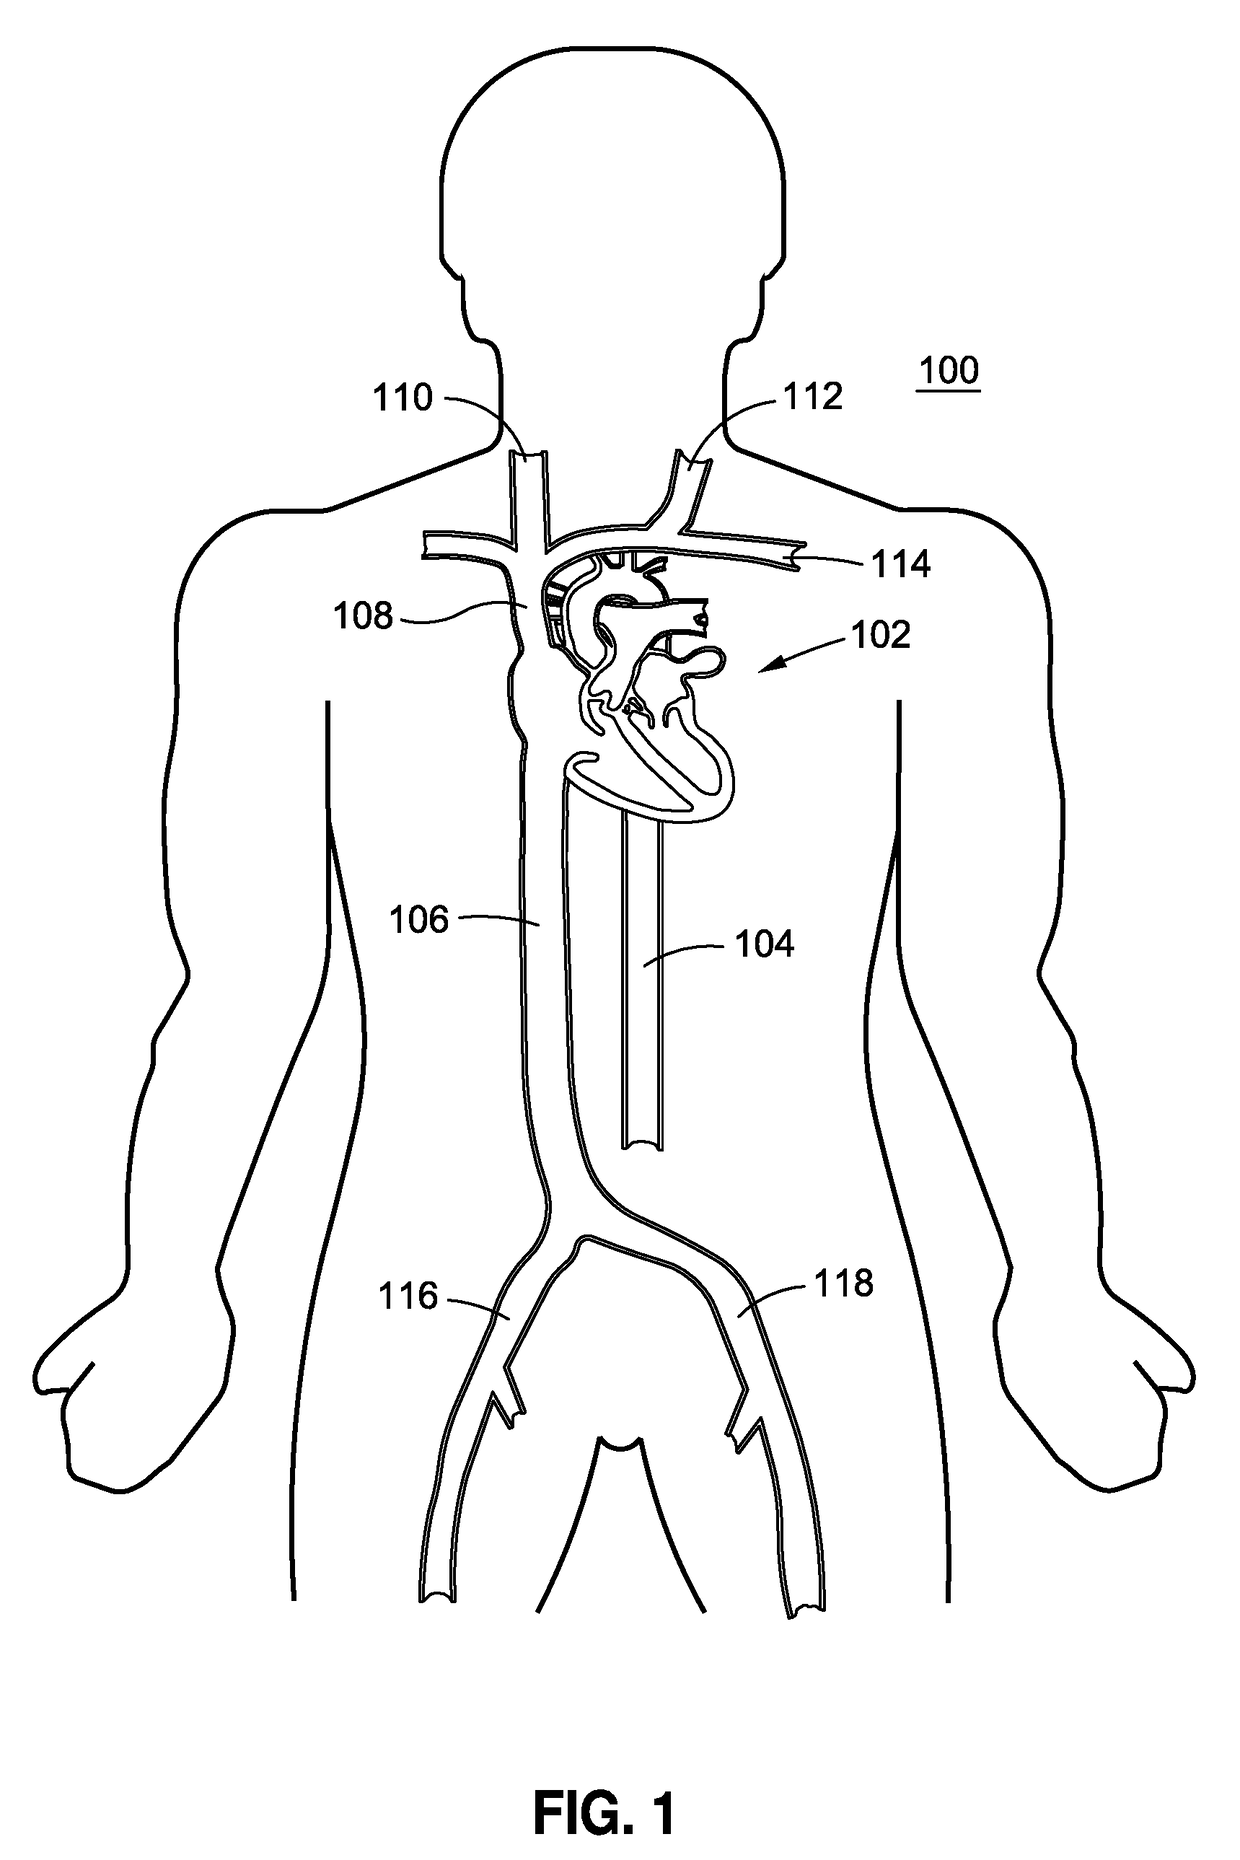 System and method for transcatheter heart valve platform